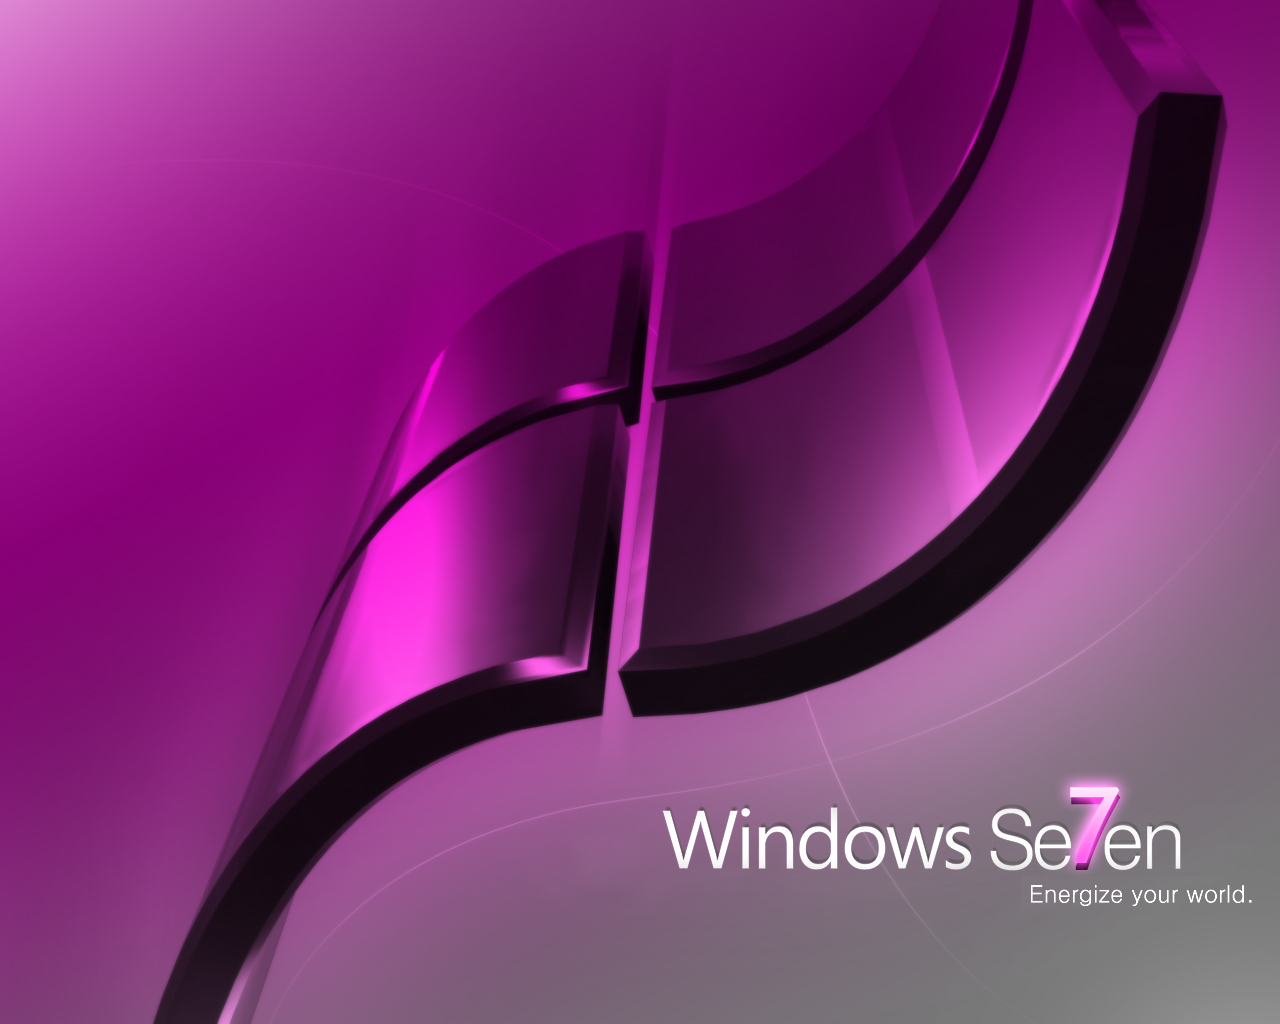 Windows 7   Windows 7 wallpaper download gratis doar de aici descarc